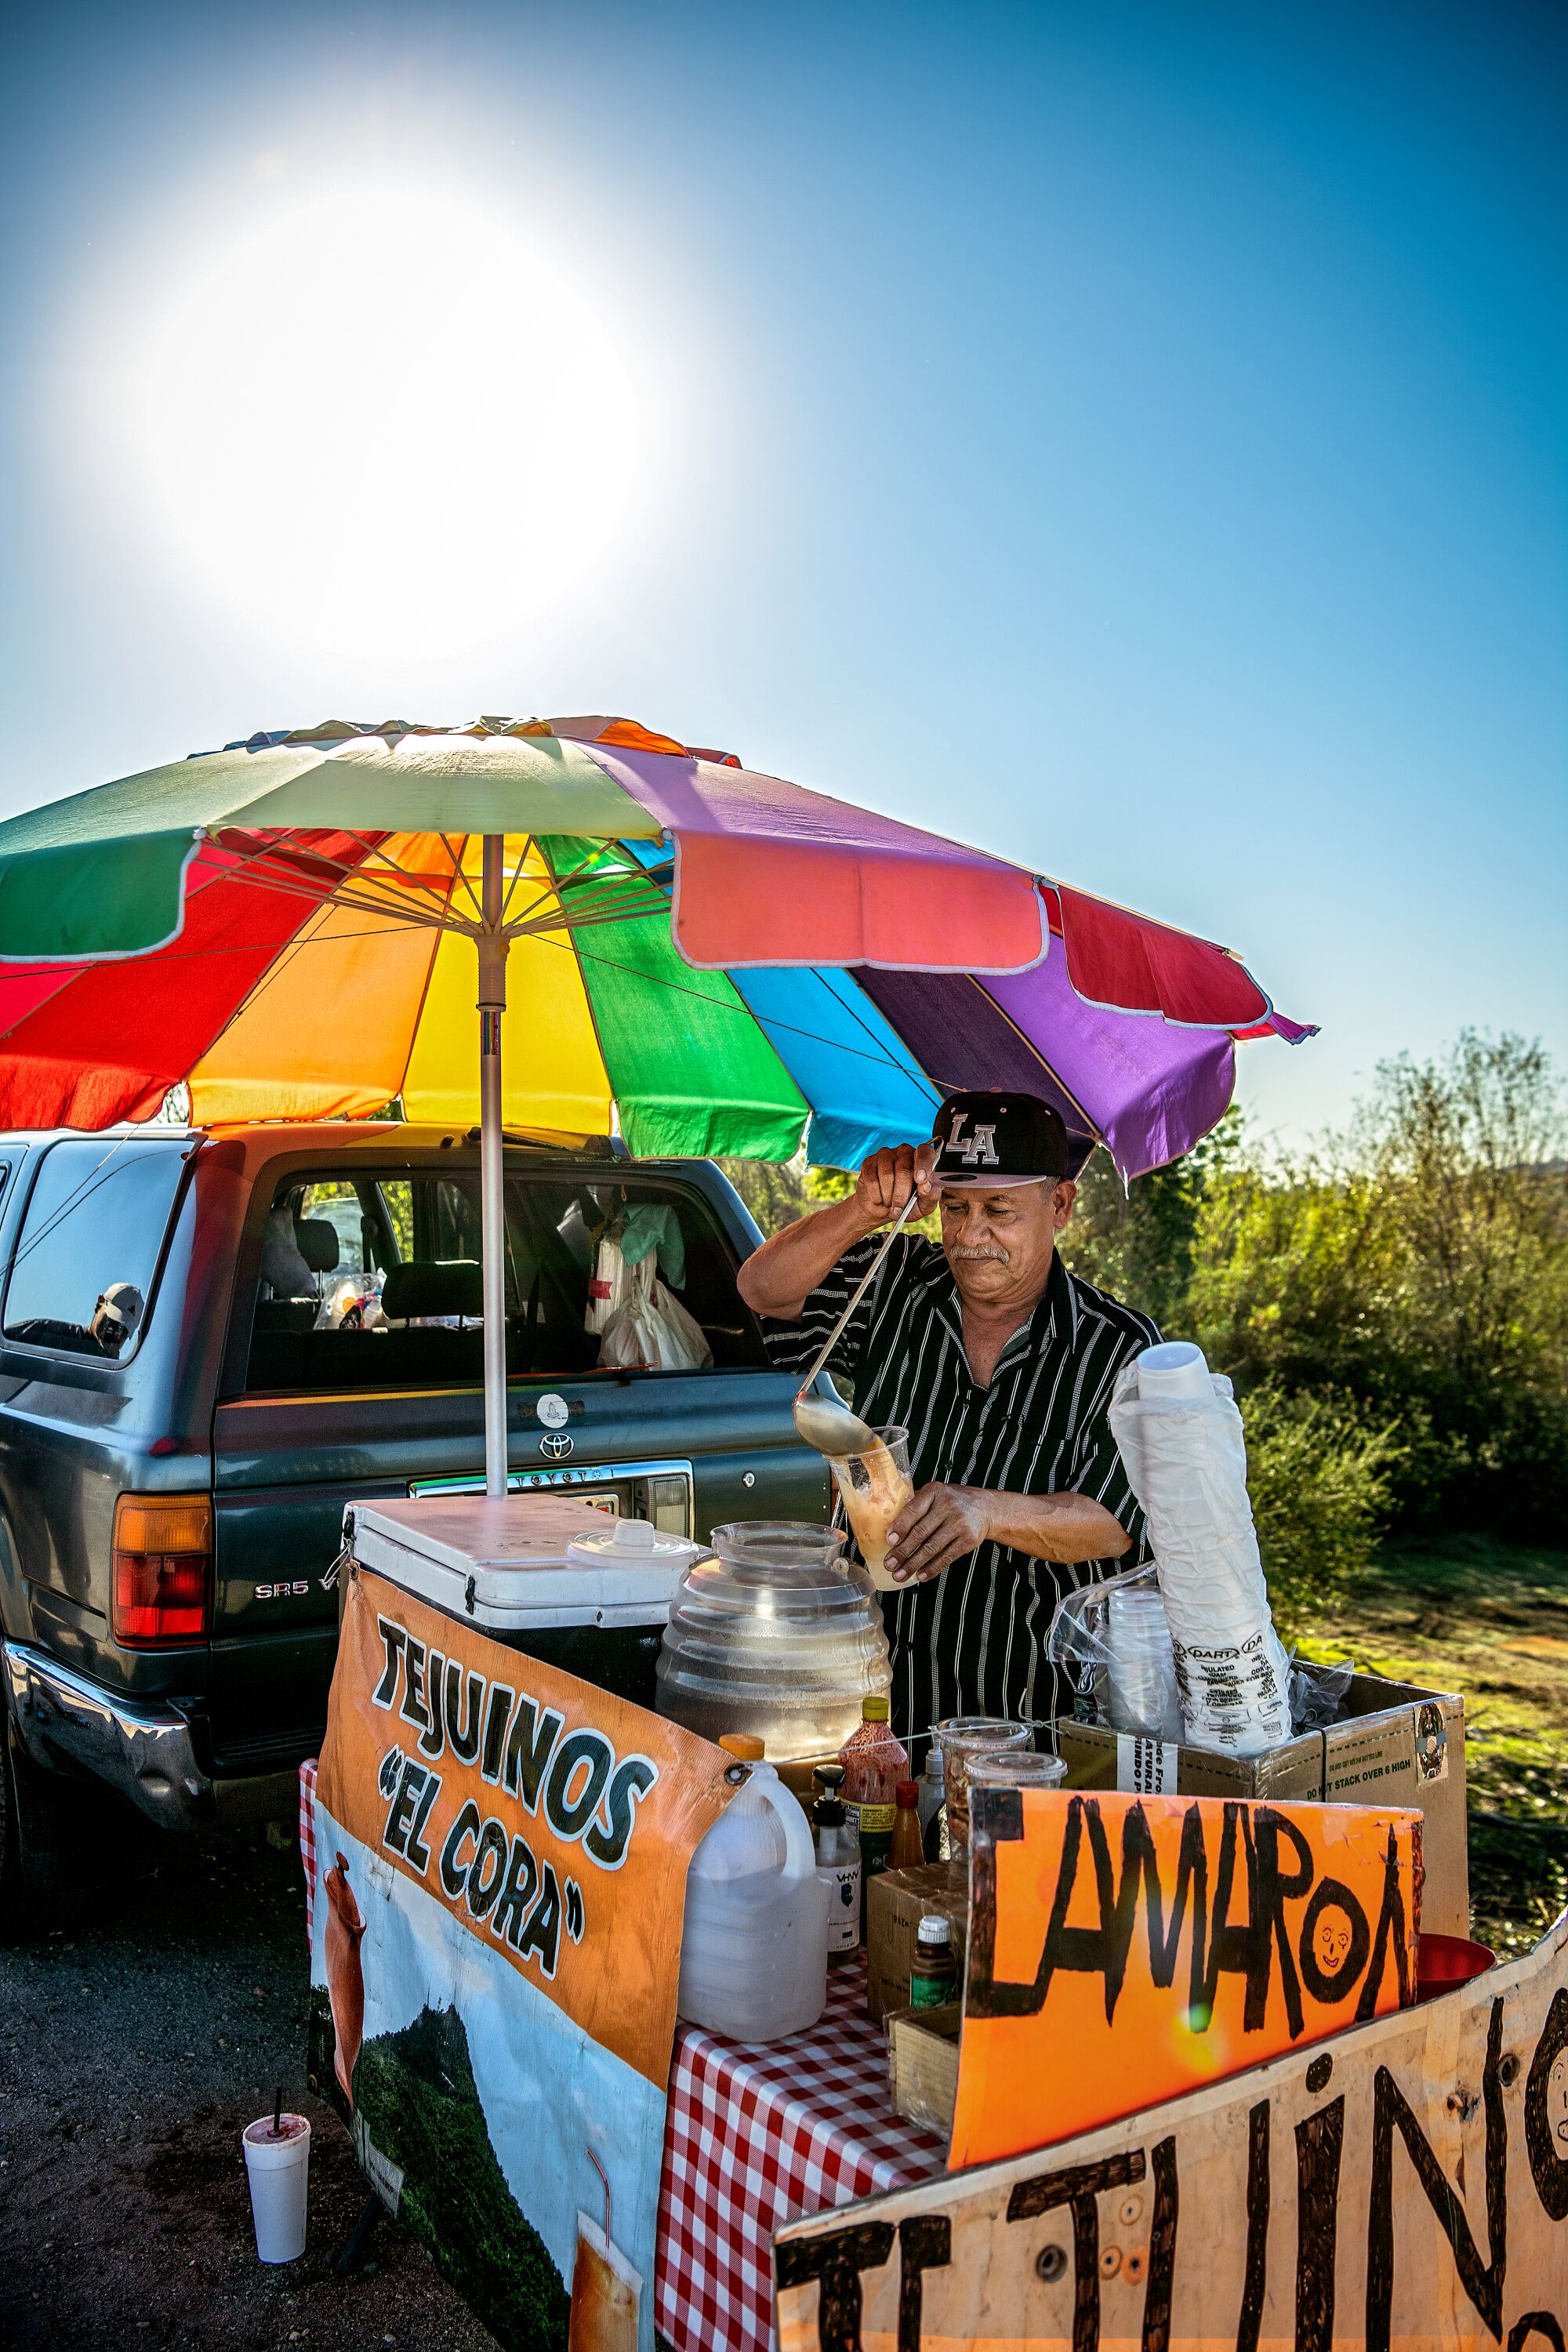 A vendor serves tejuino from a roadside stand under a colorful umbrella.